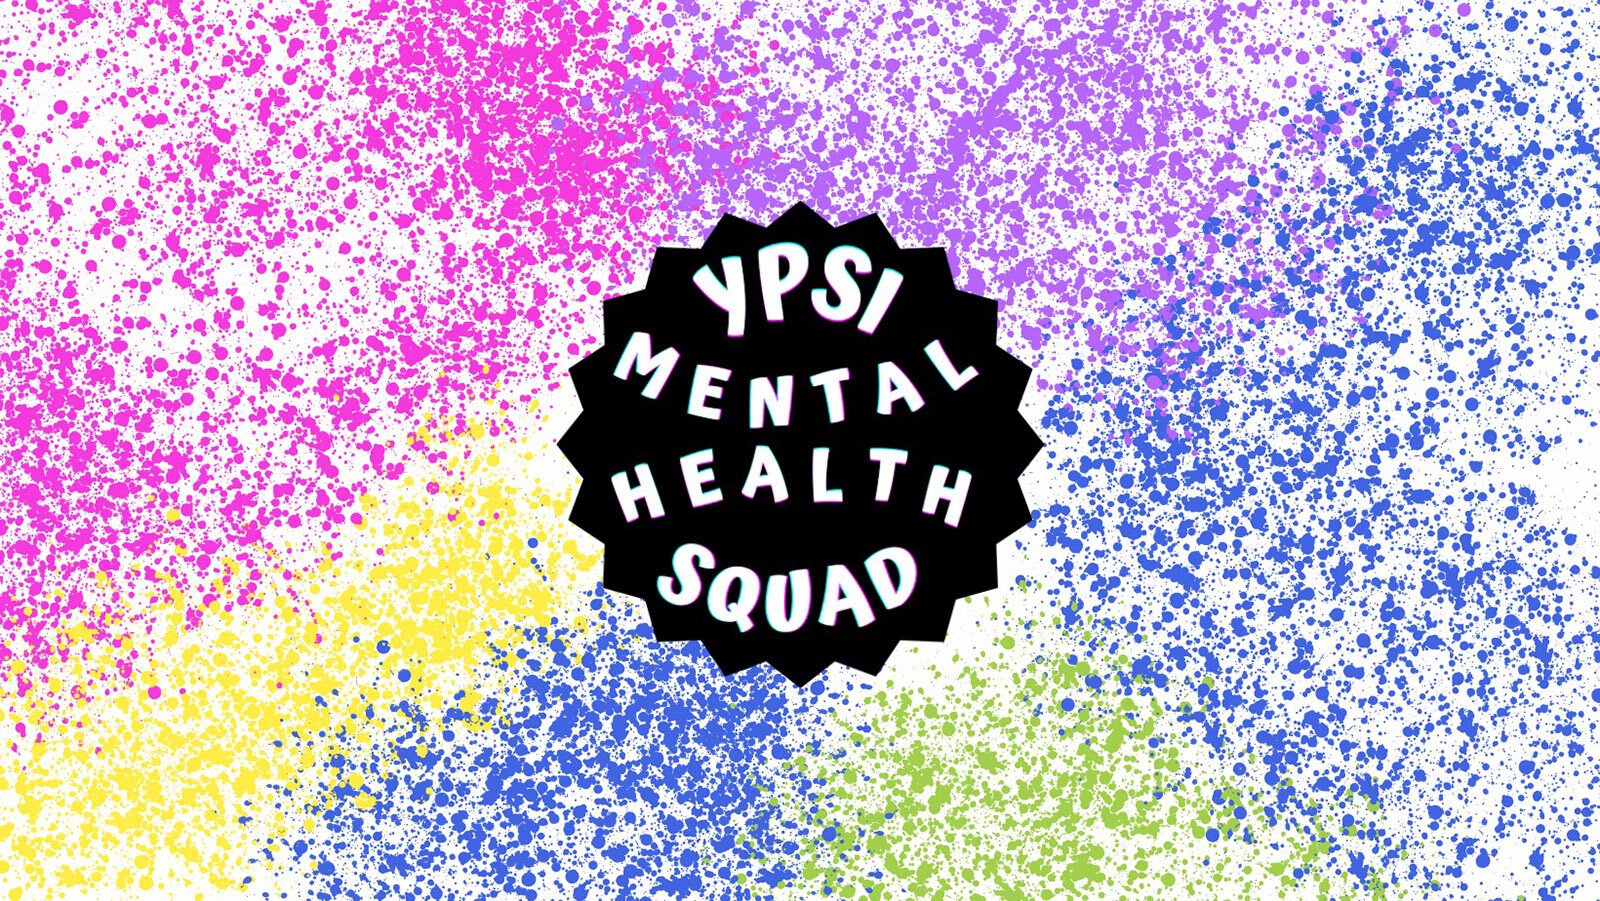 The Ypsi Mental Health Squad logo.